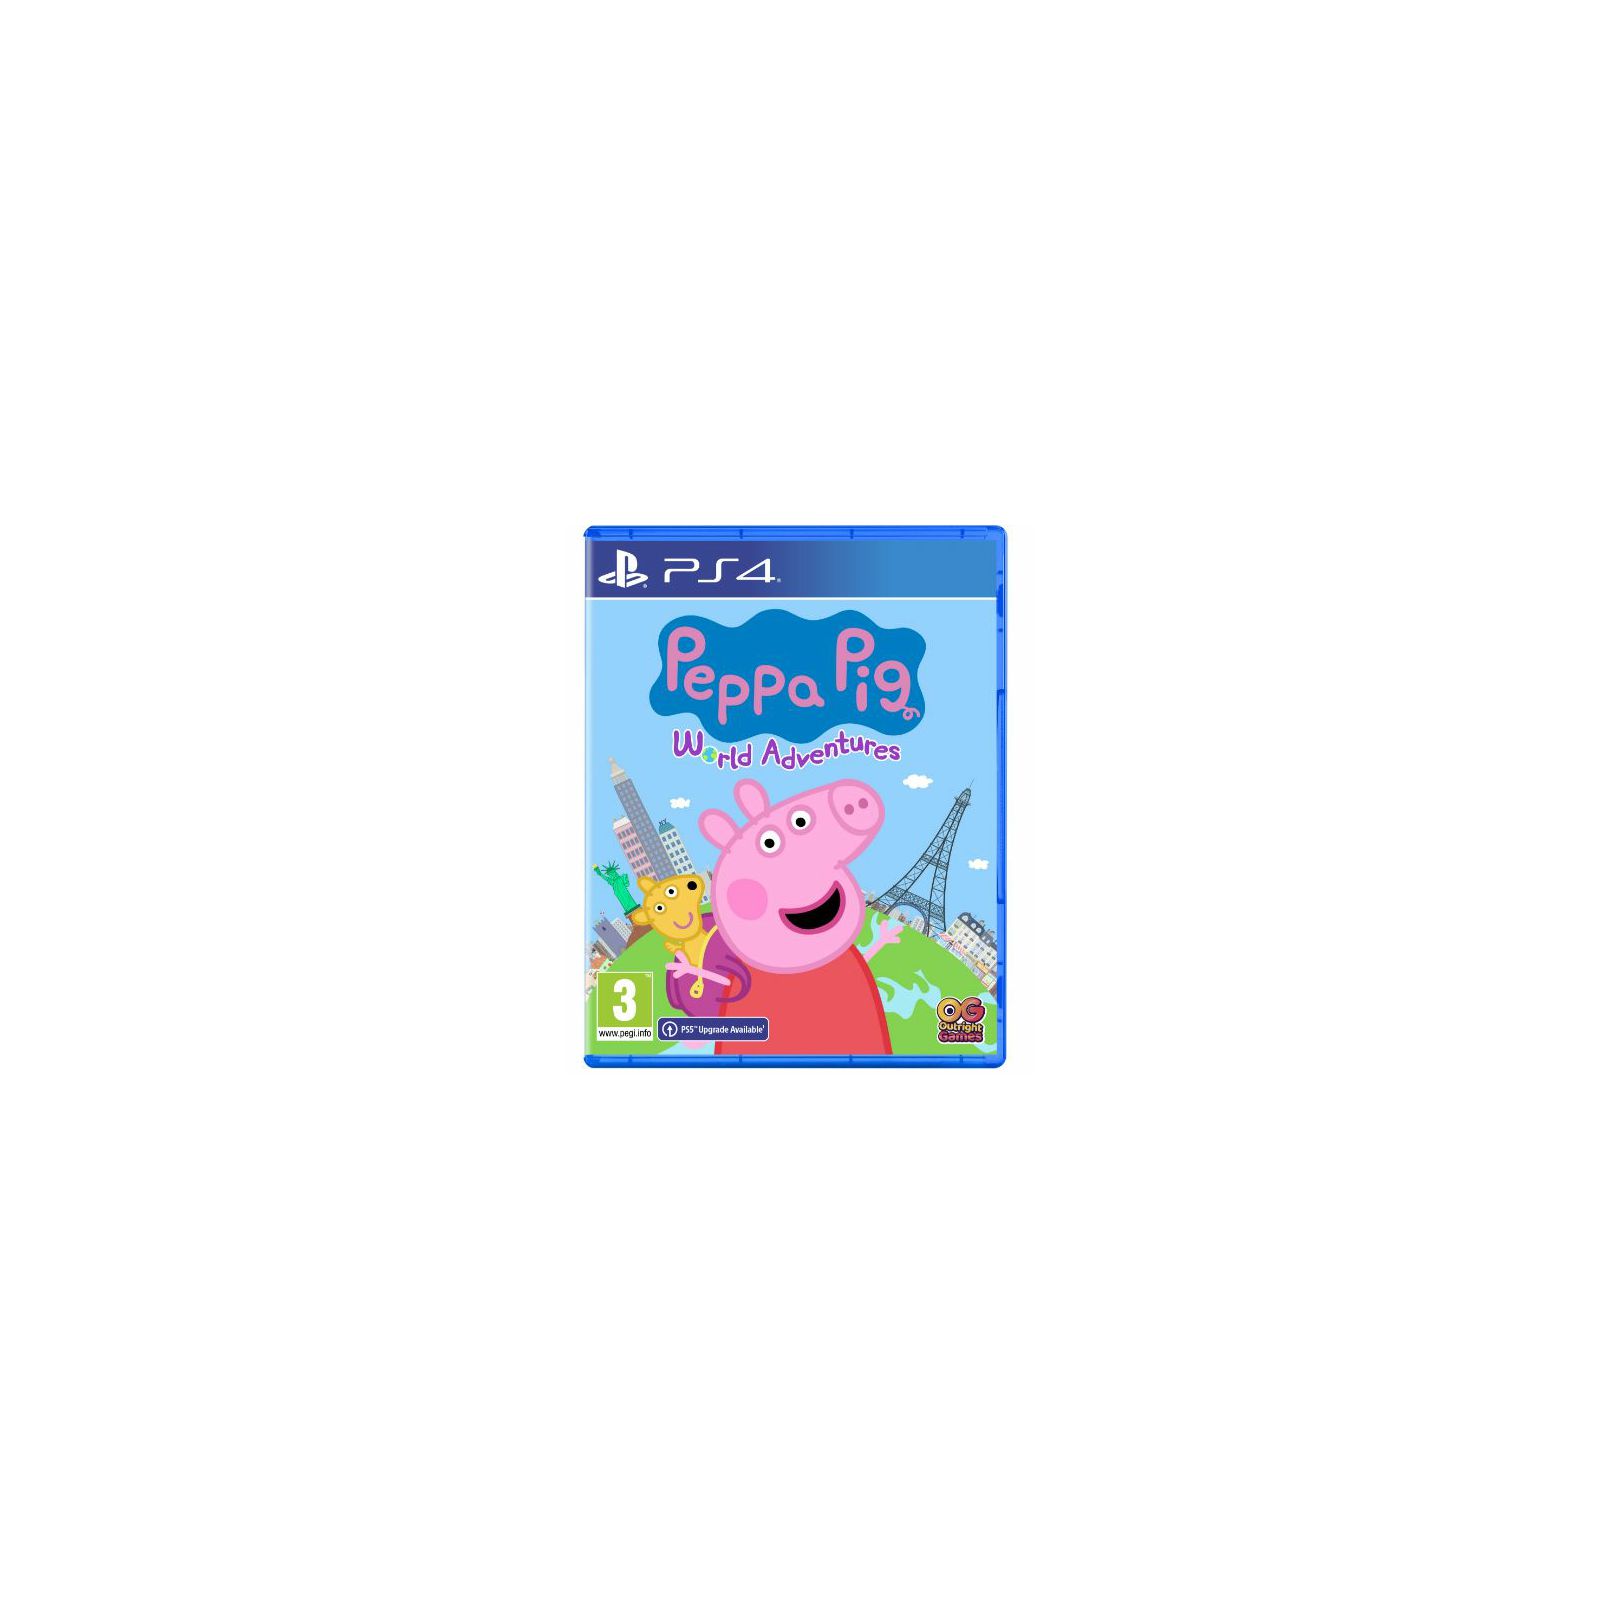 Peppa Pig: World Adventures (PS4)